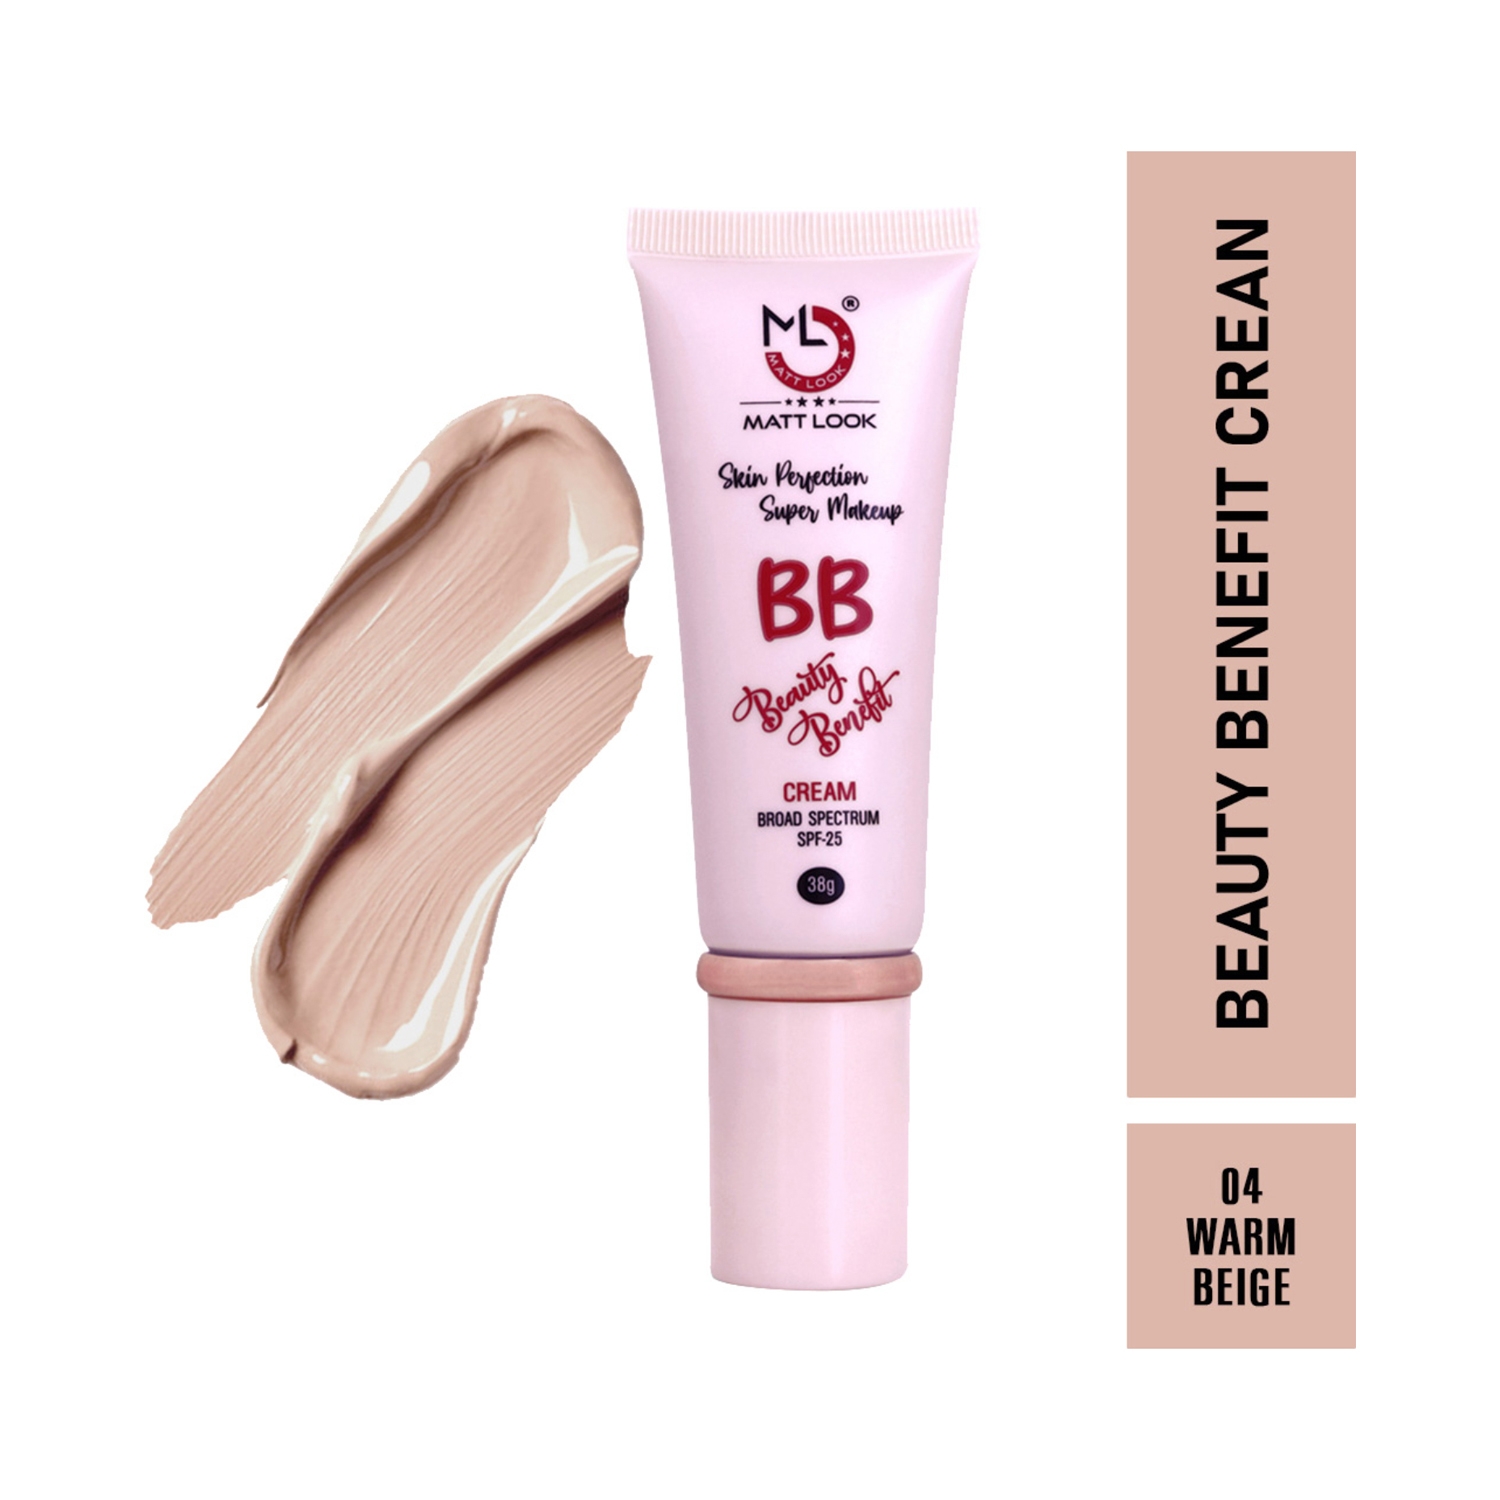 Matt Look Skin Perfection Super Makeup BB Beauty Benefit Cream With SPF 25 - 04 Warm Beige (38g)